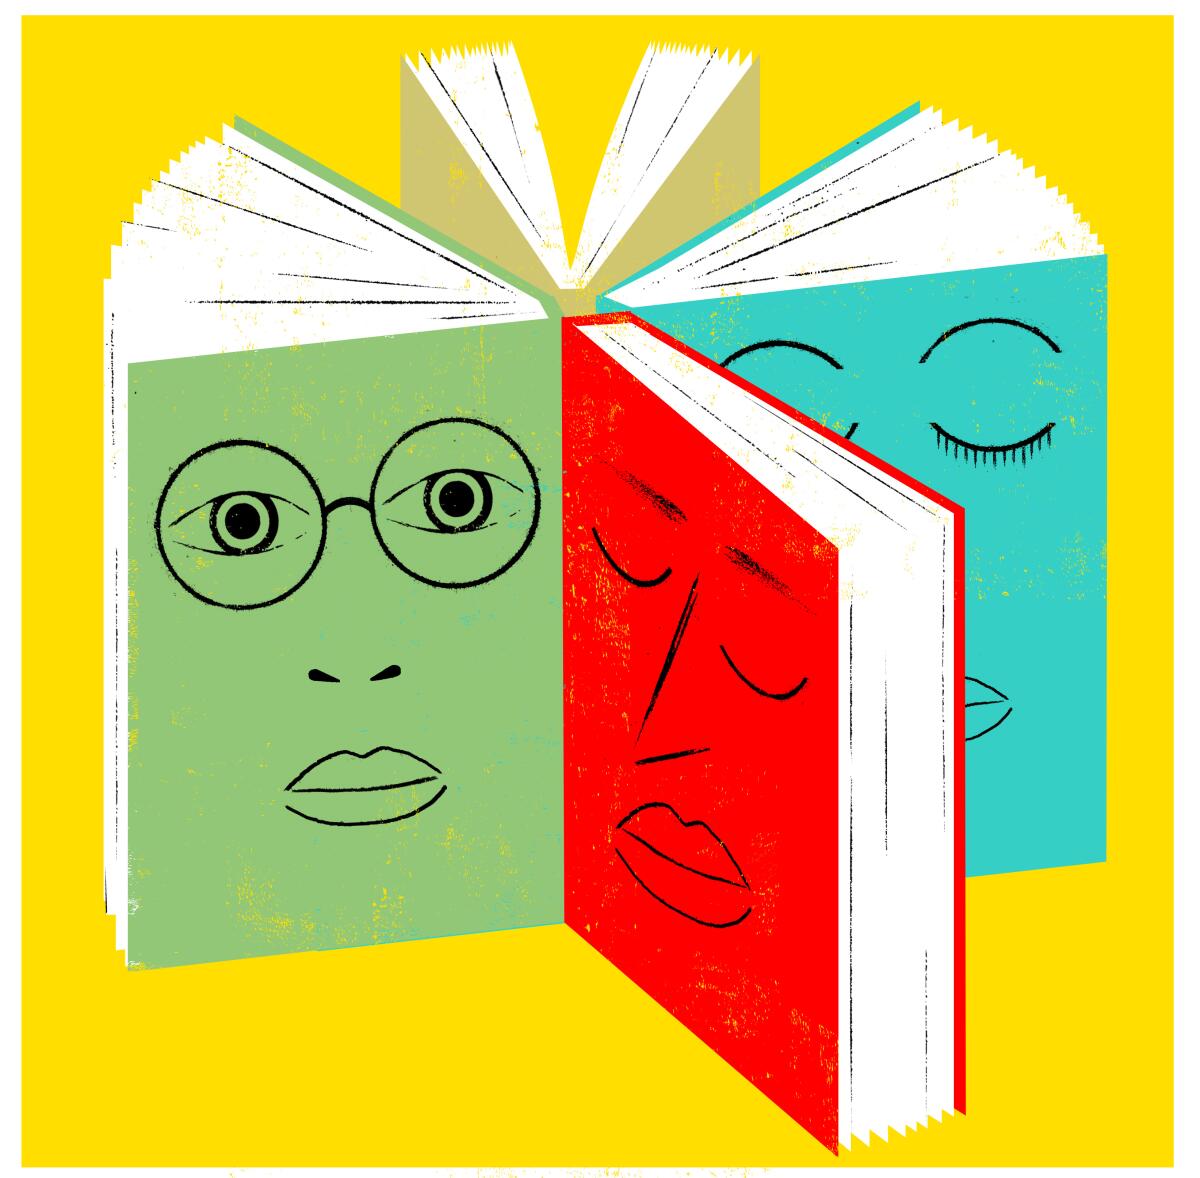 Books illustration